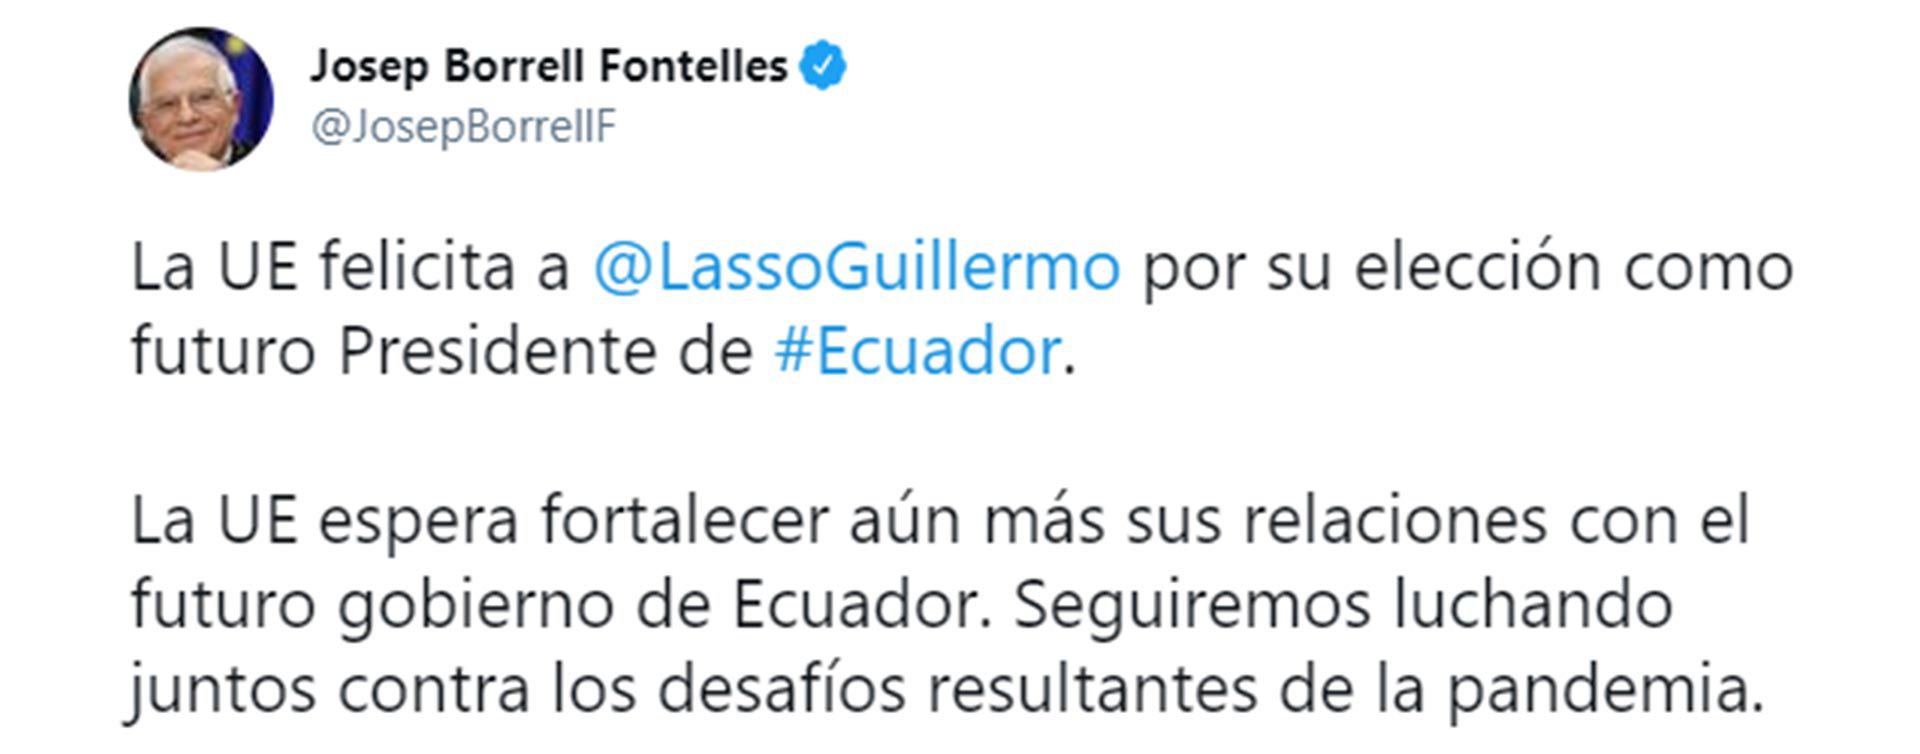 Josep Borrell tuit